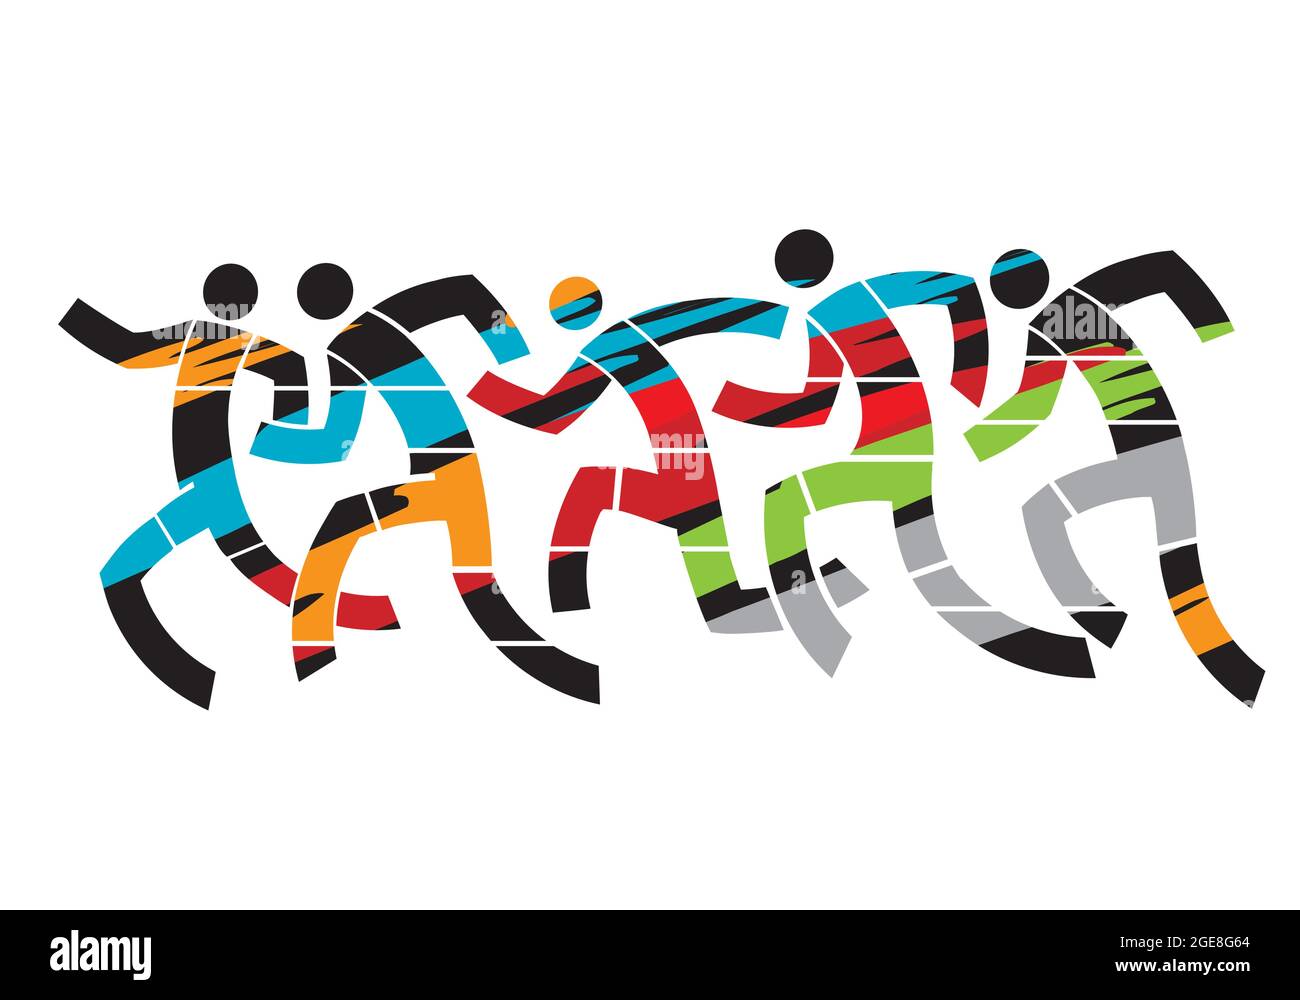 Läufer, Laufrennen. Bunte abstrakte stilisierte Illustration von fünf Läufern.Vektor verfügbar. Stock Vektor